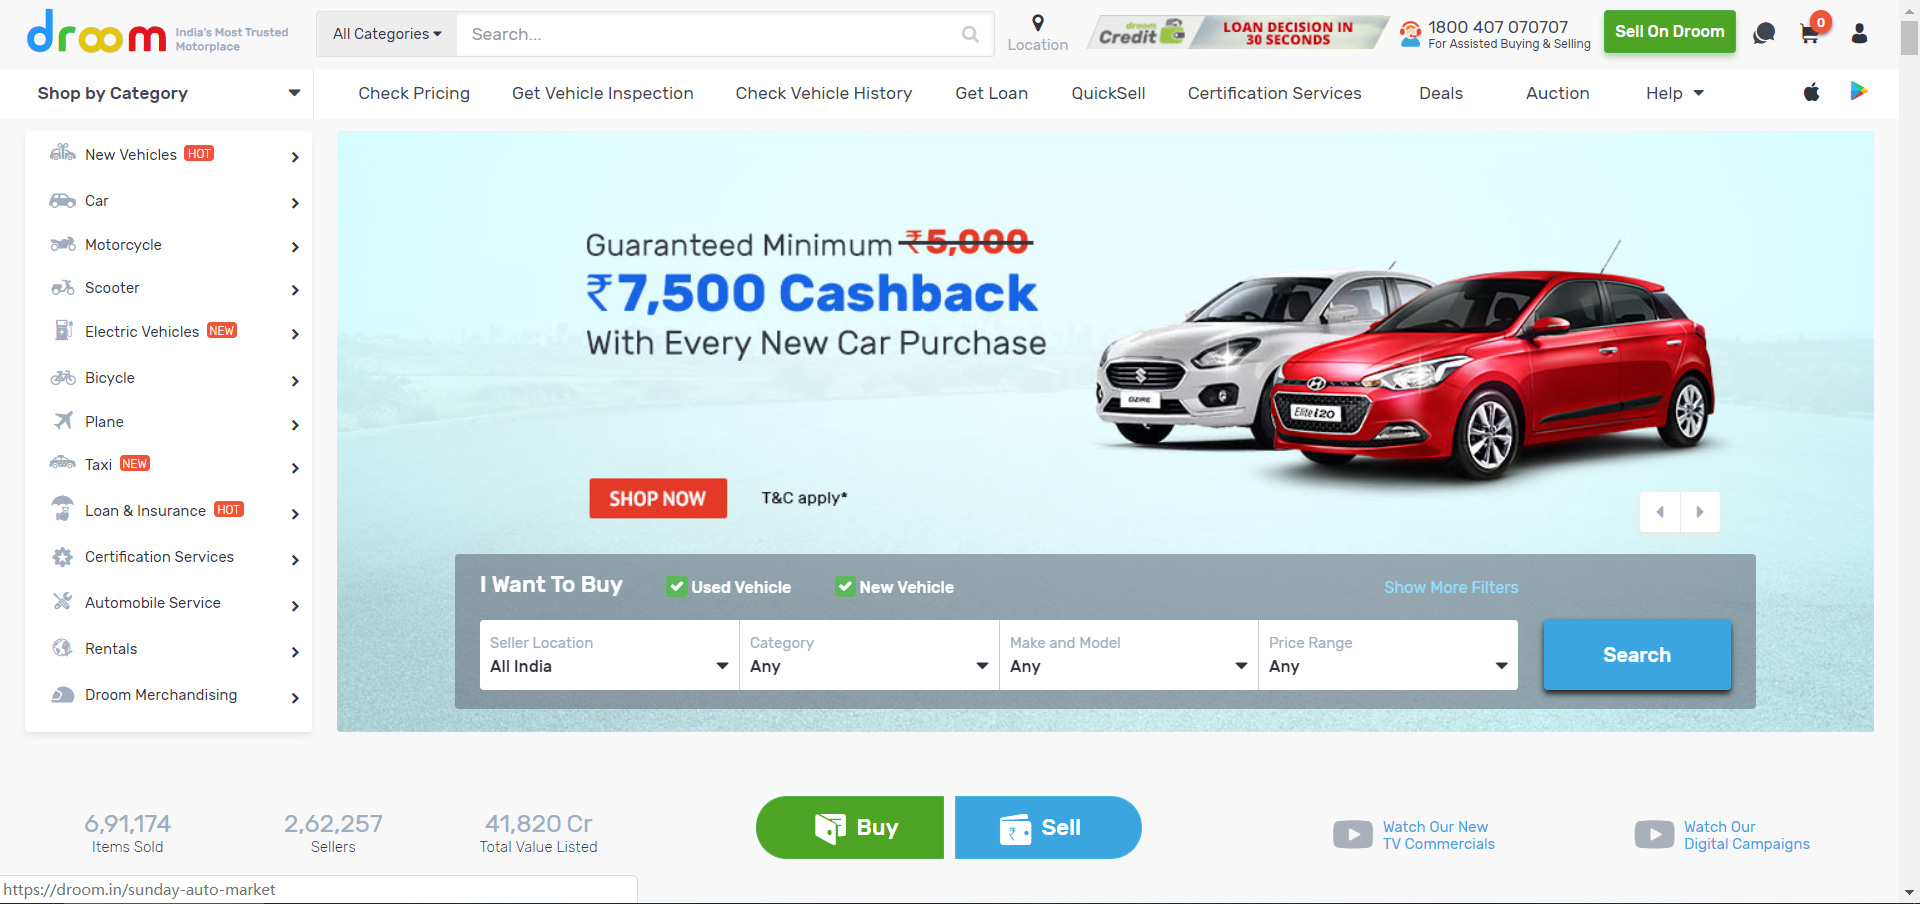 Indian online car dealer Droom raises yet another US$30m